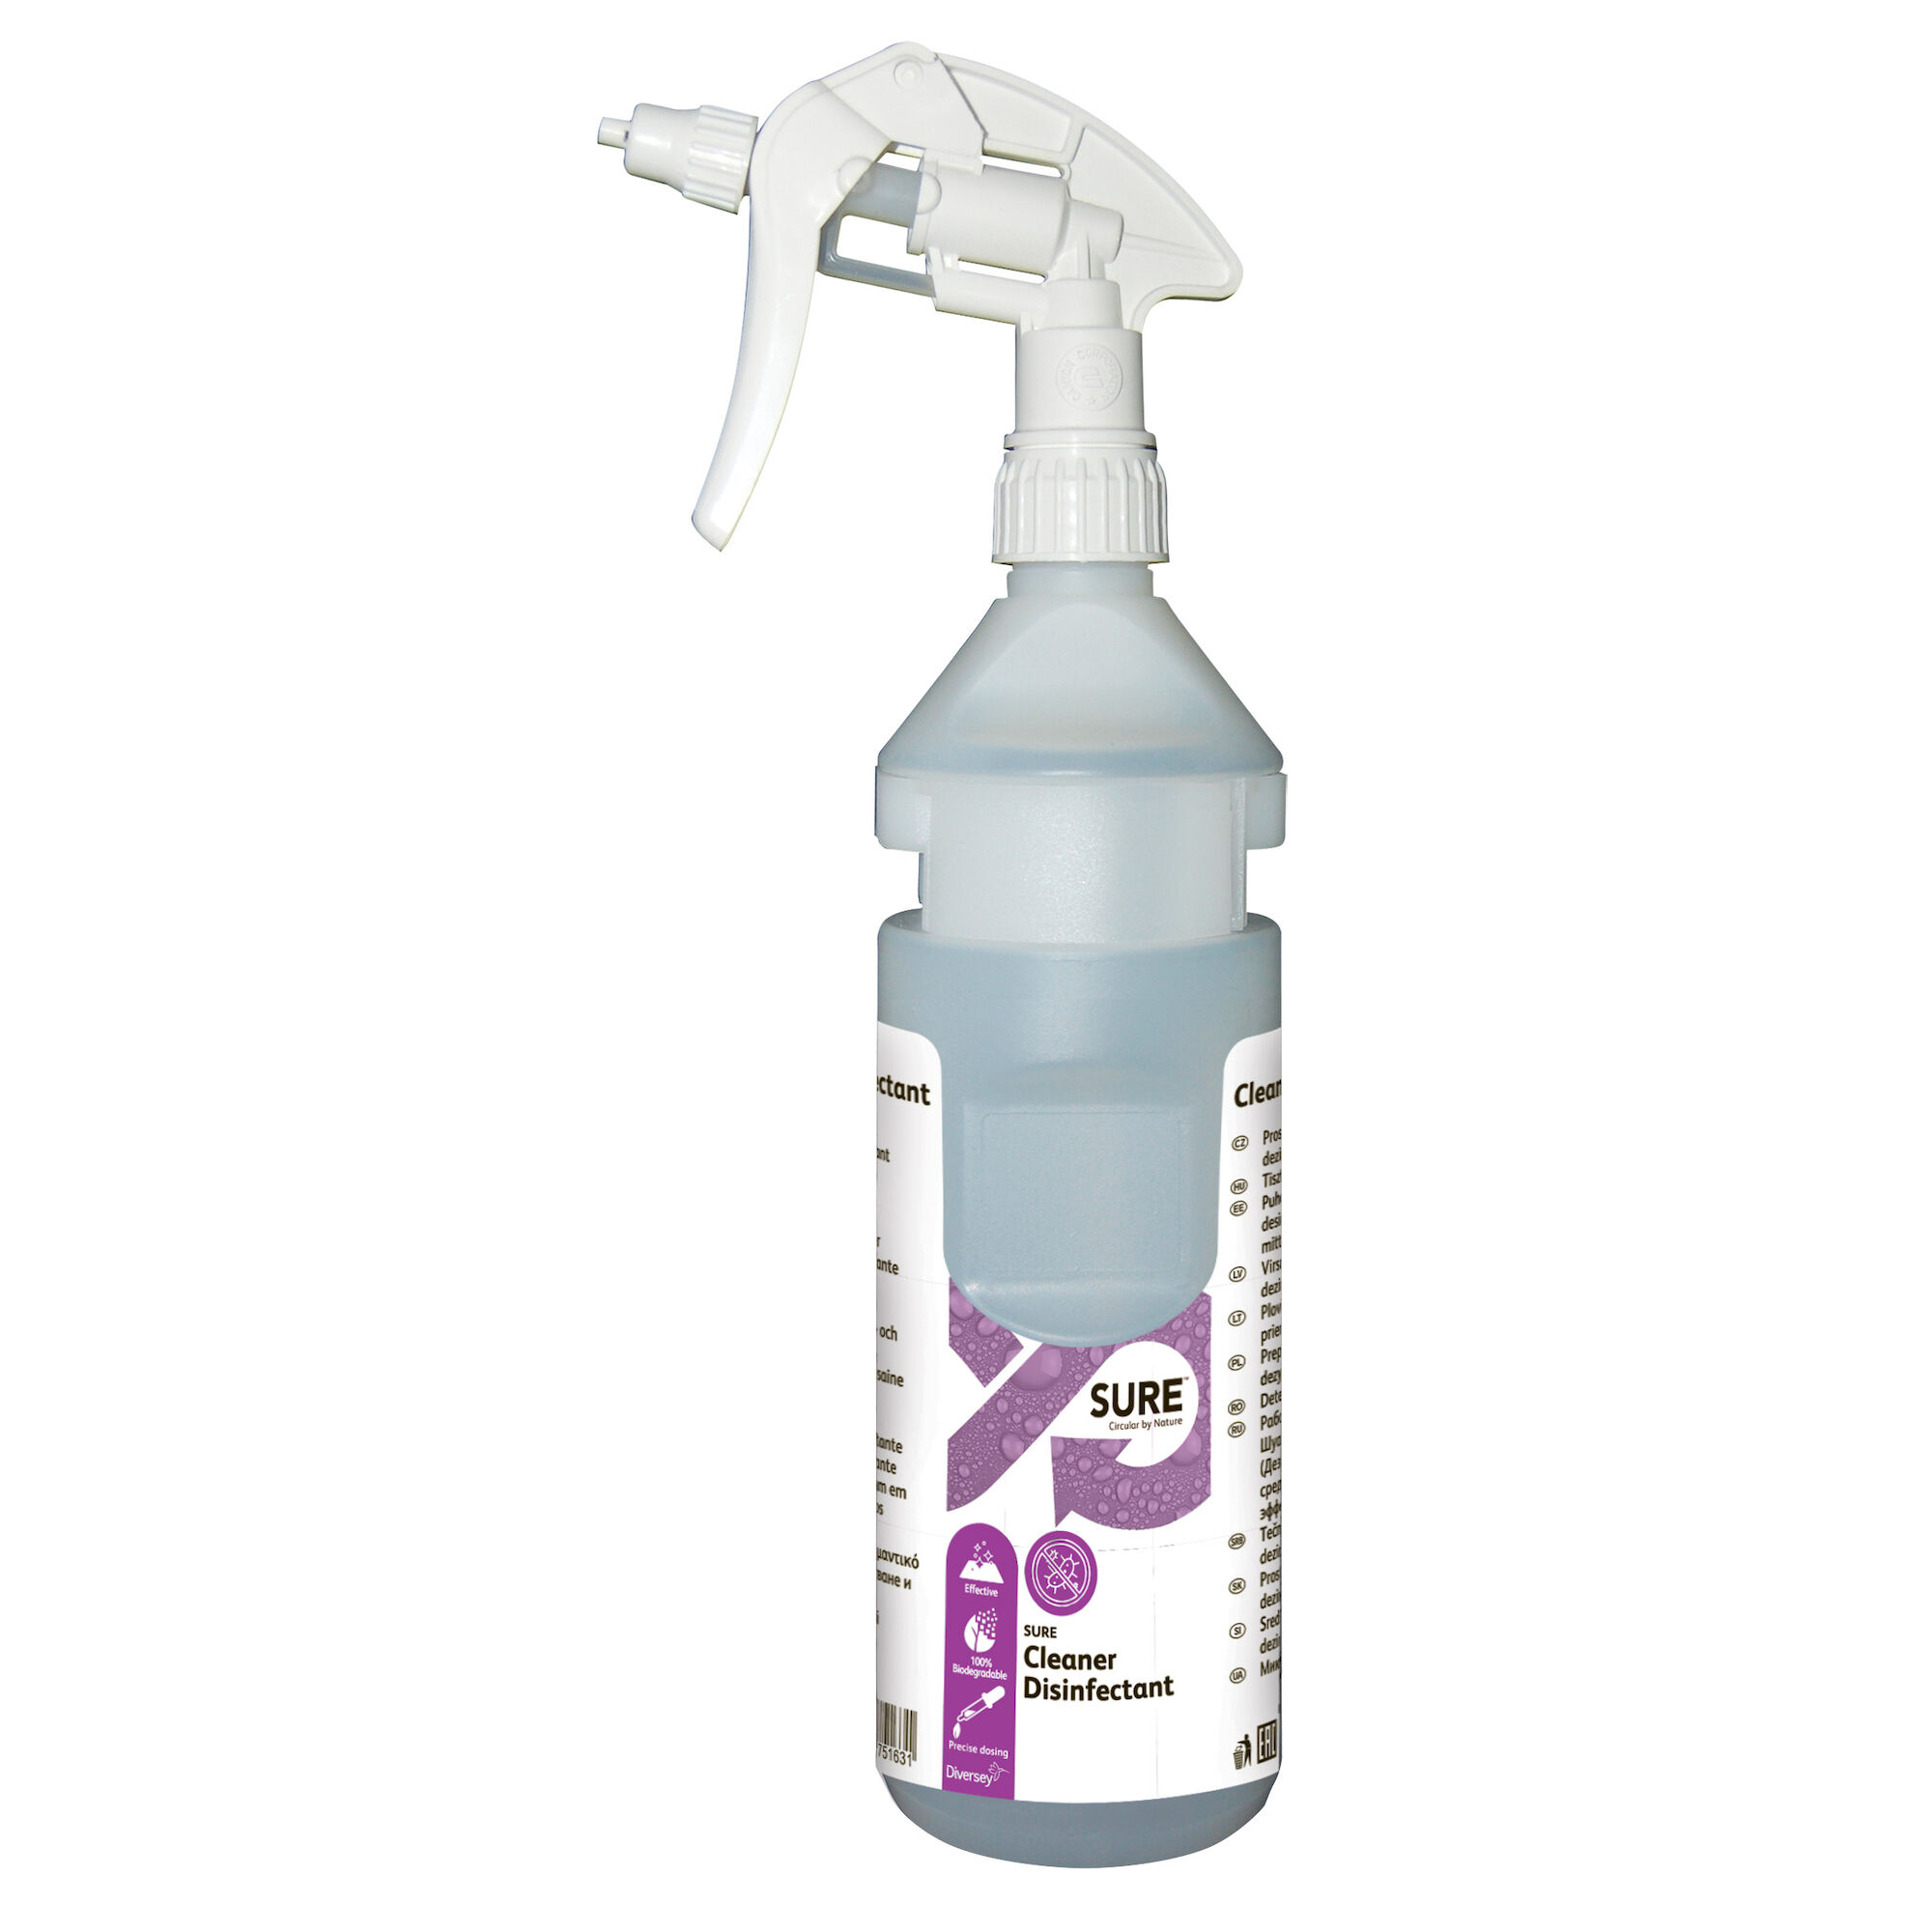 7524029-SURE Cleaner Disinfectant Divermite Refill trigger bottle-AI141390-RGB-20x20cm.jpg